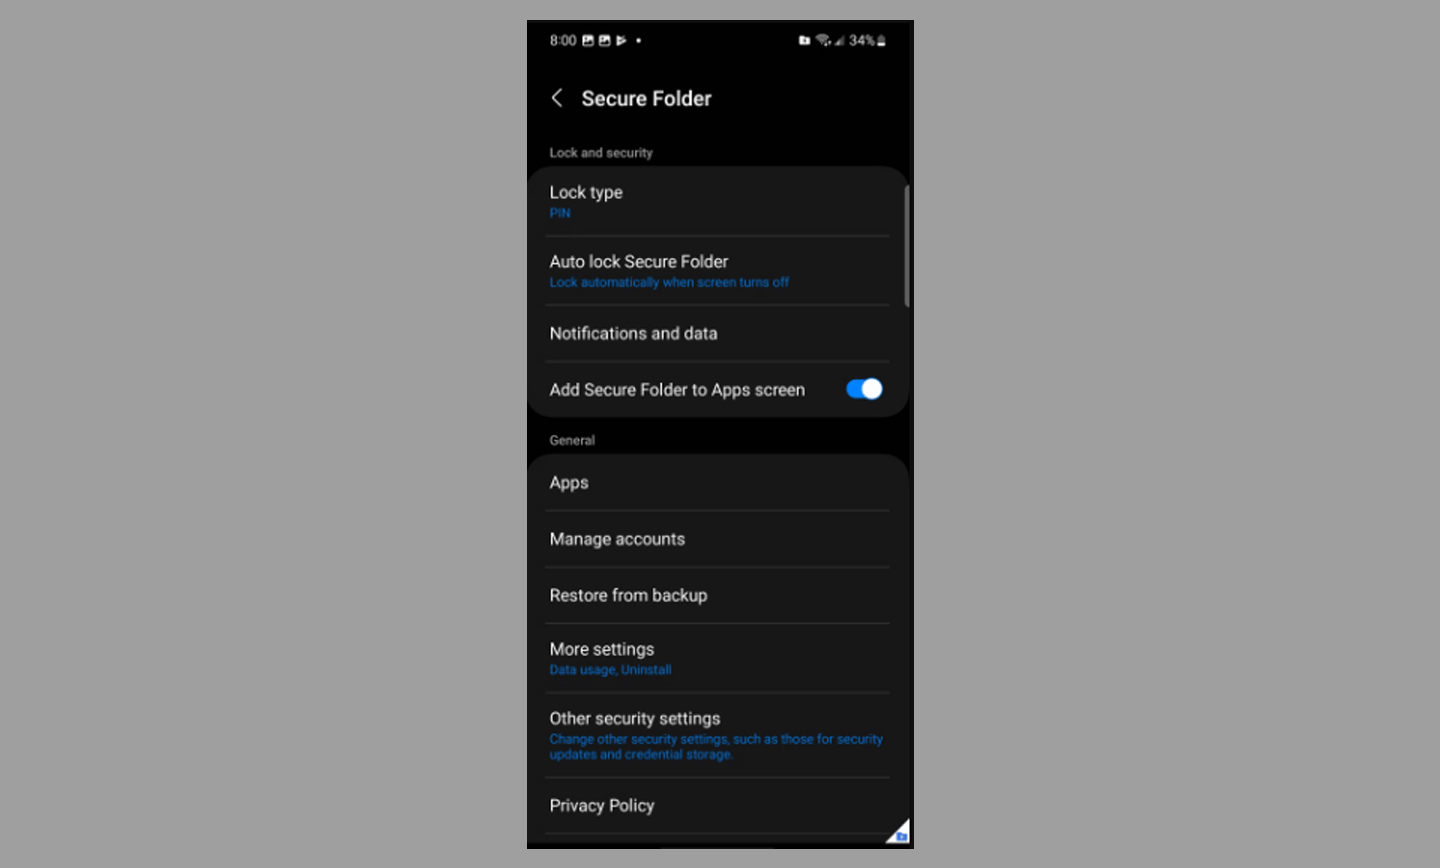 فعال سازی گزینه Add Secure Folder to Apps screen